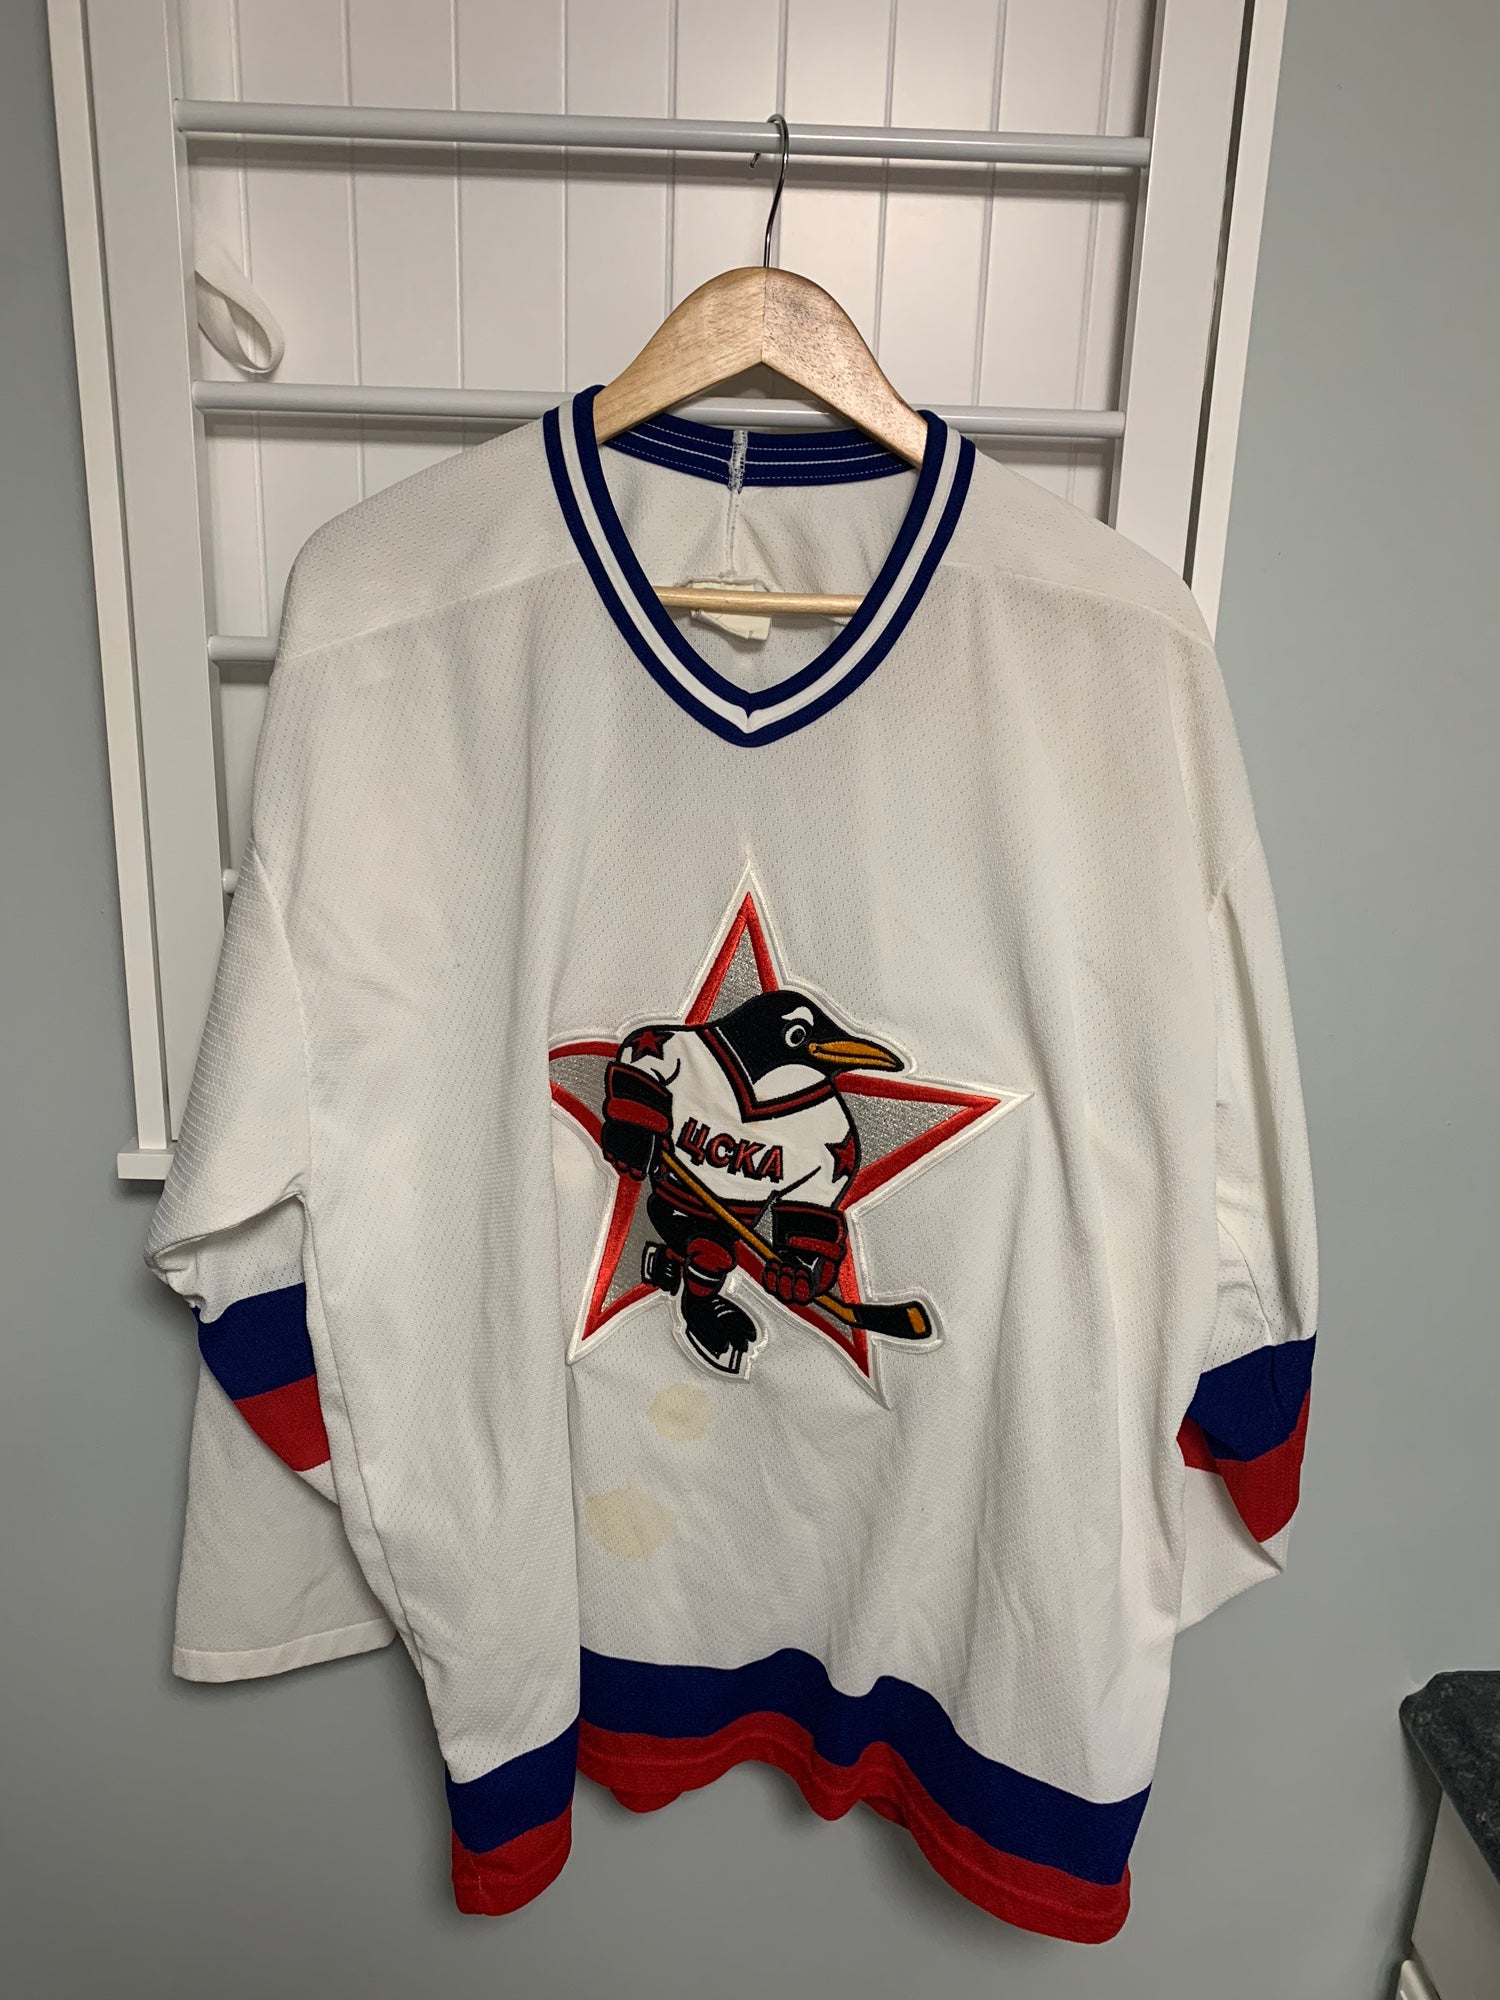 Russian Penguins Hockey Jersey